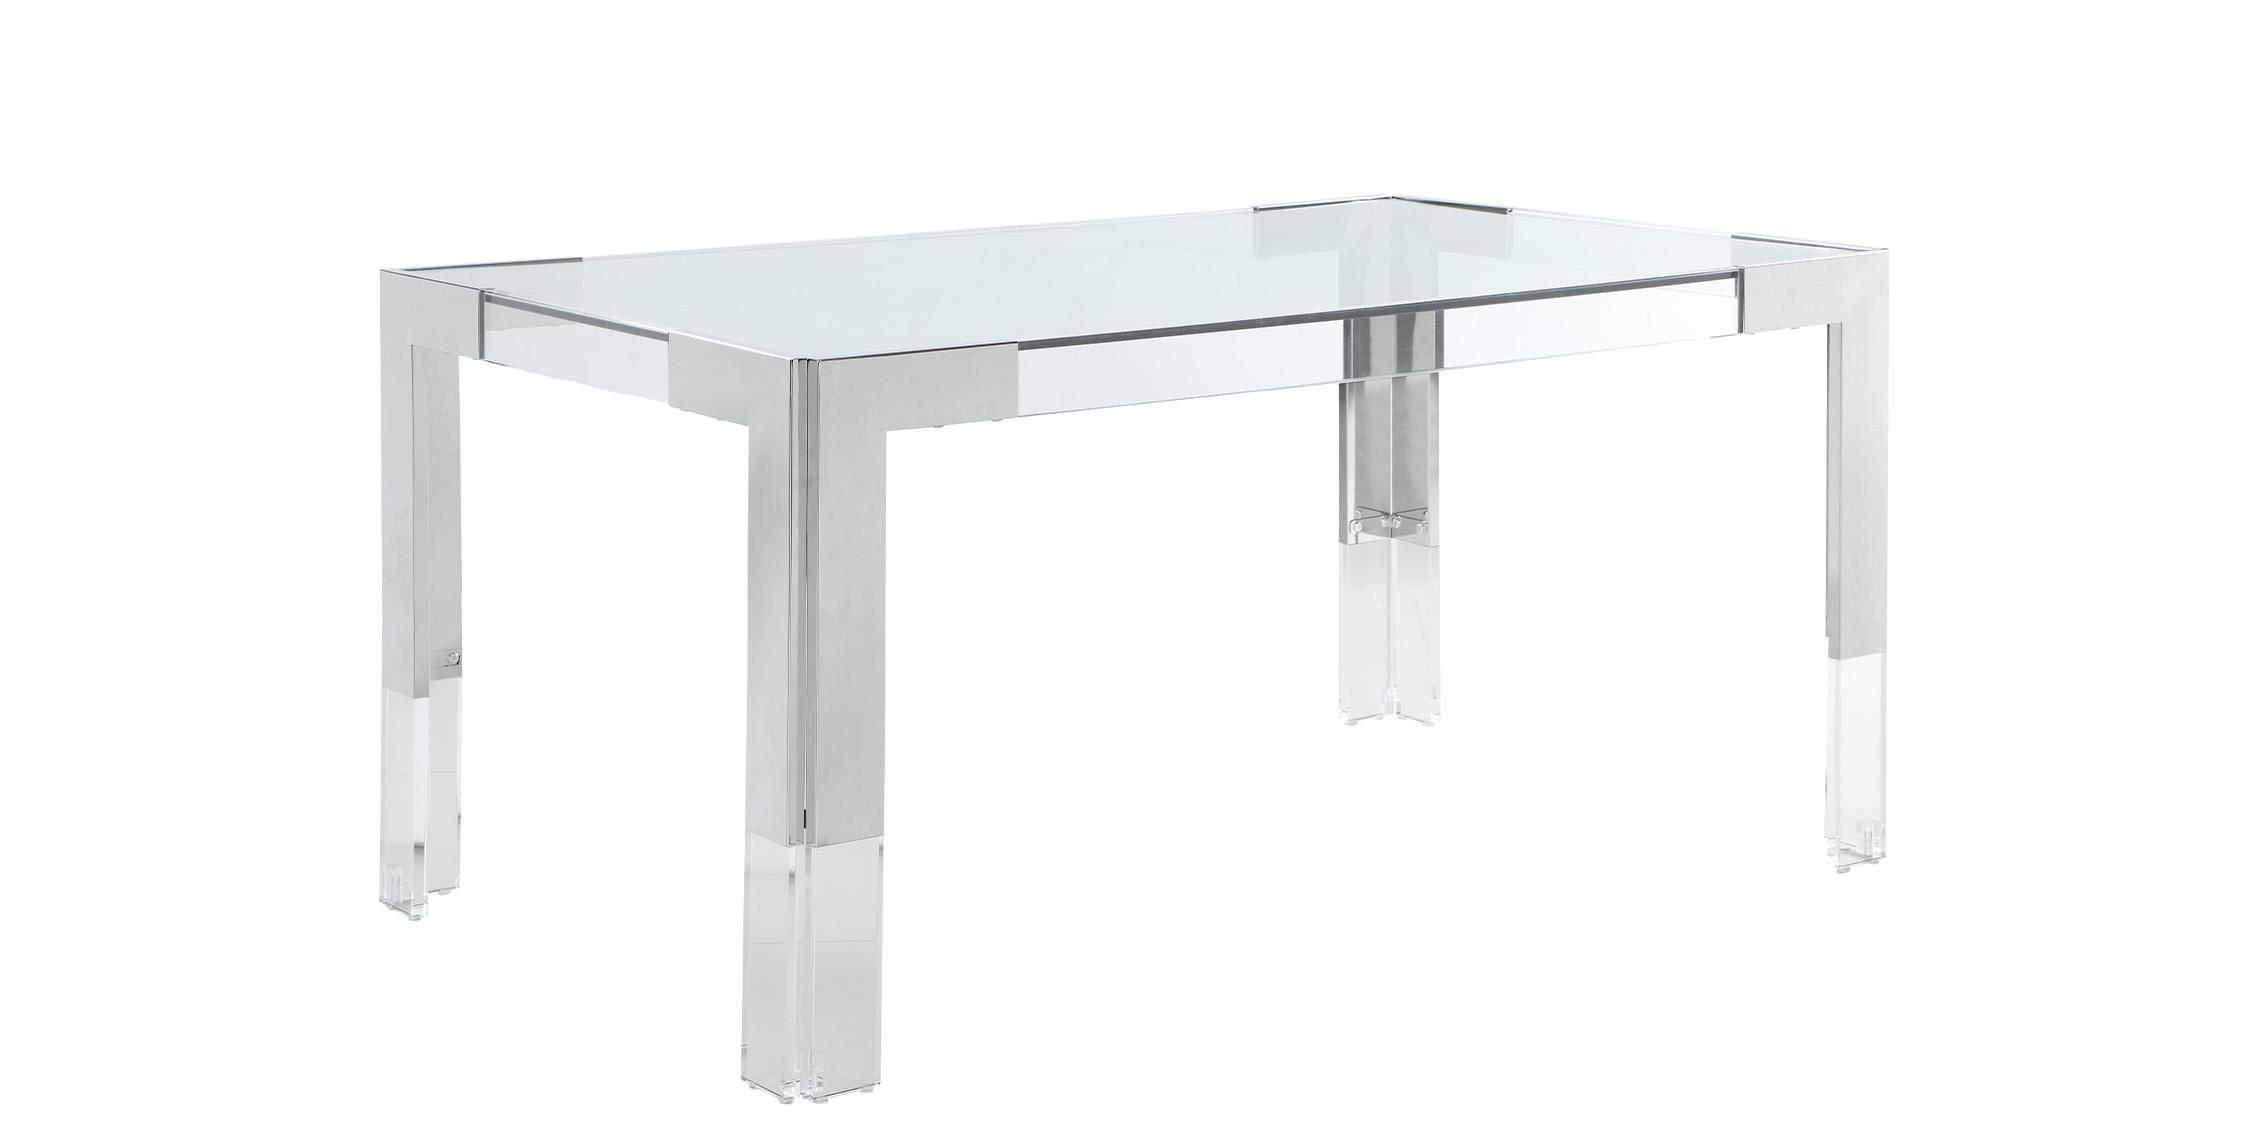 Meridian Furniture CASPER 717-T Dining Table